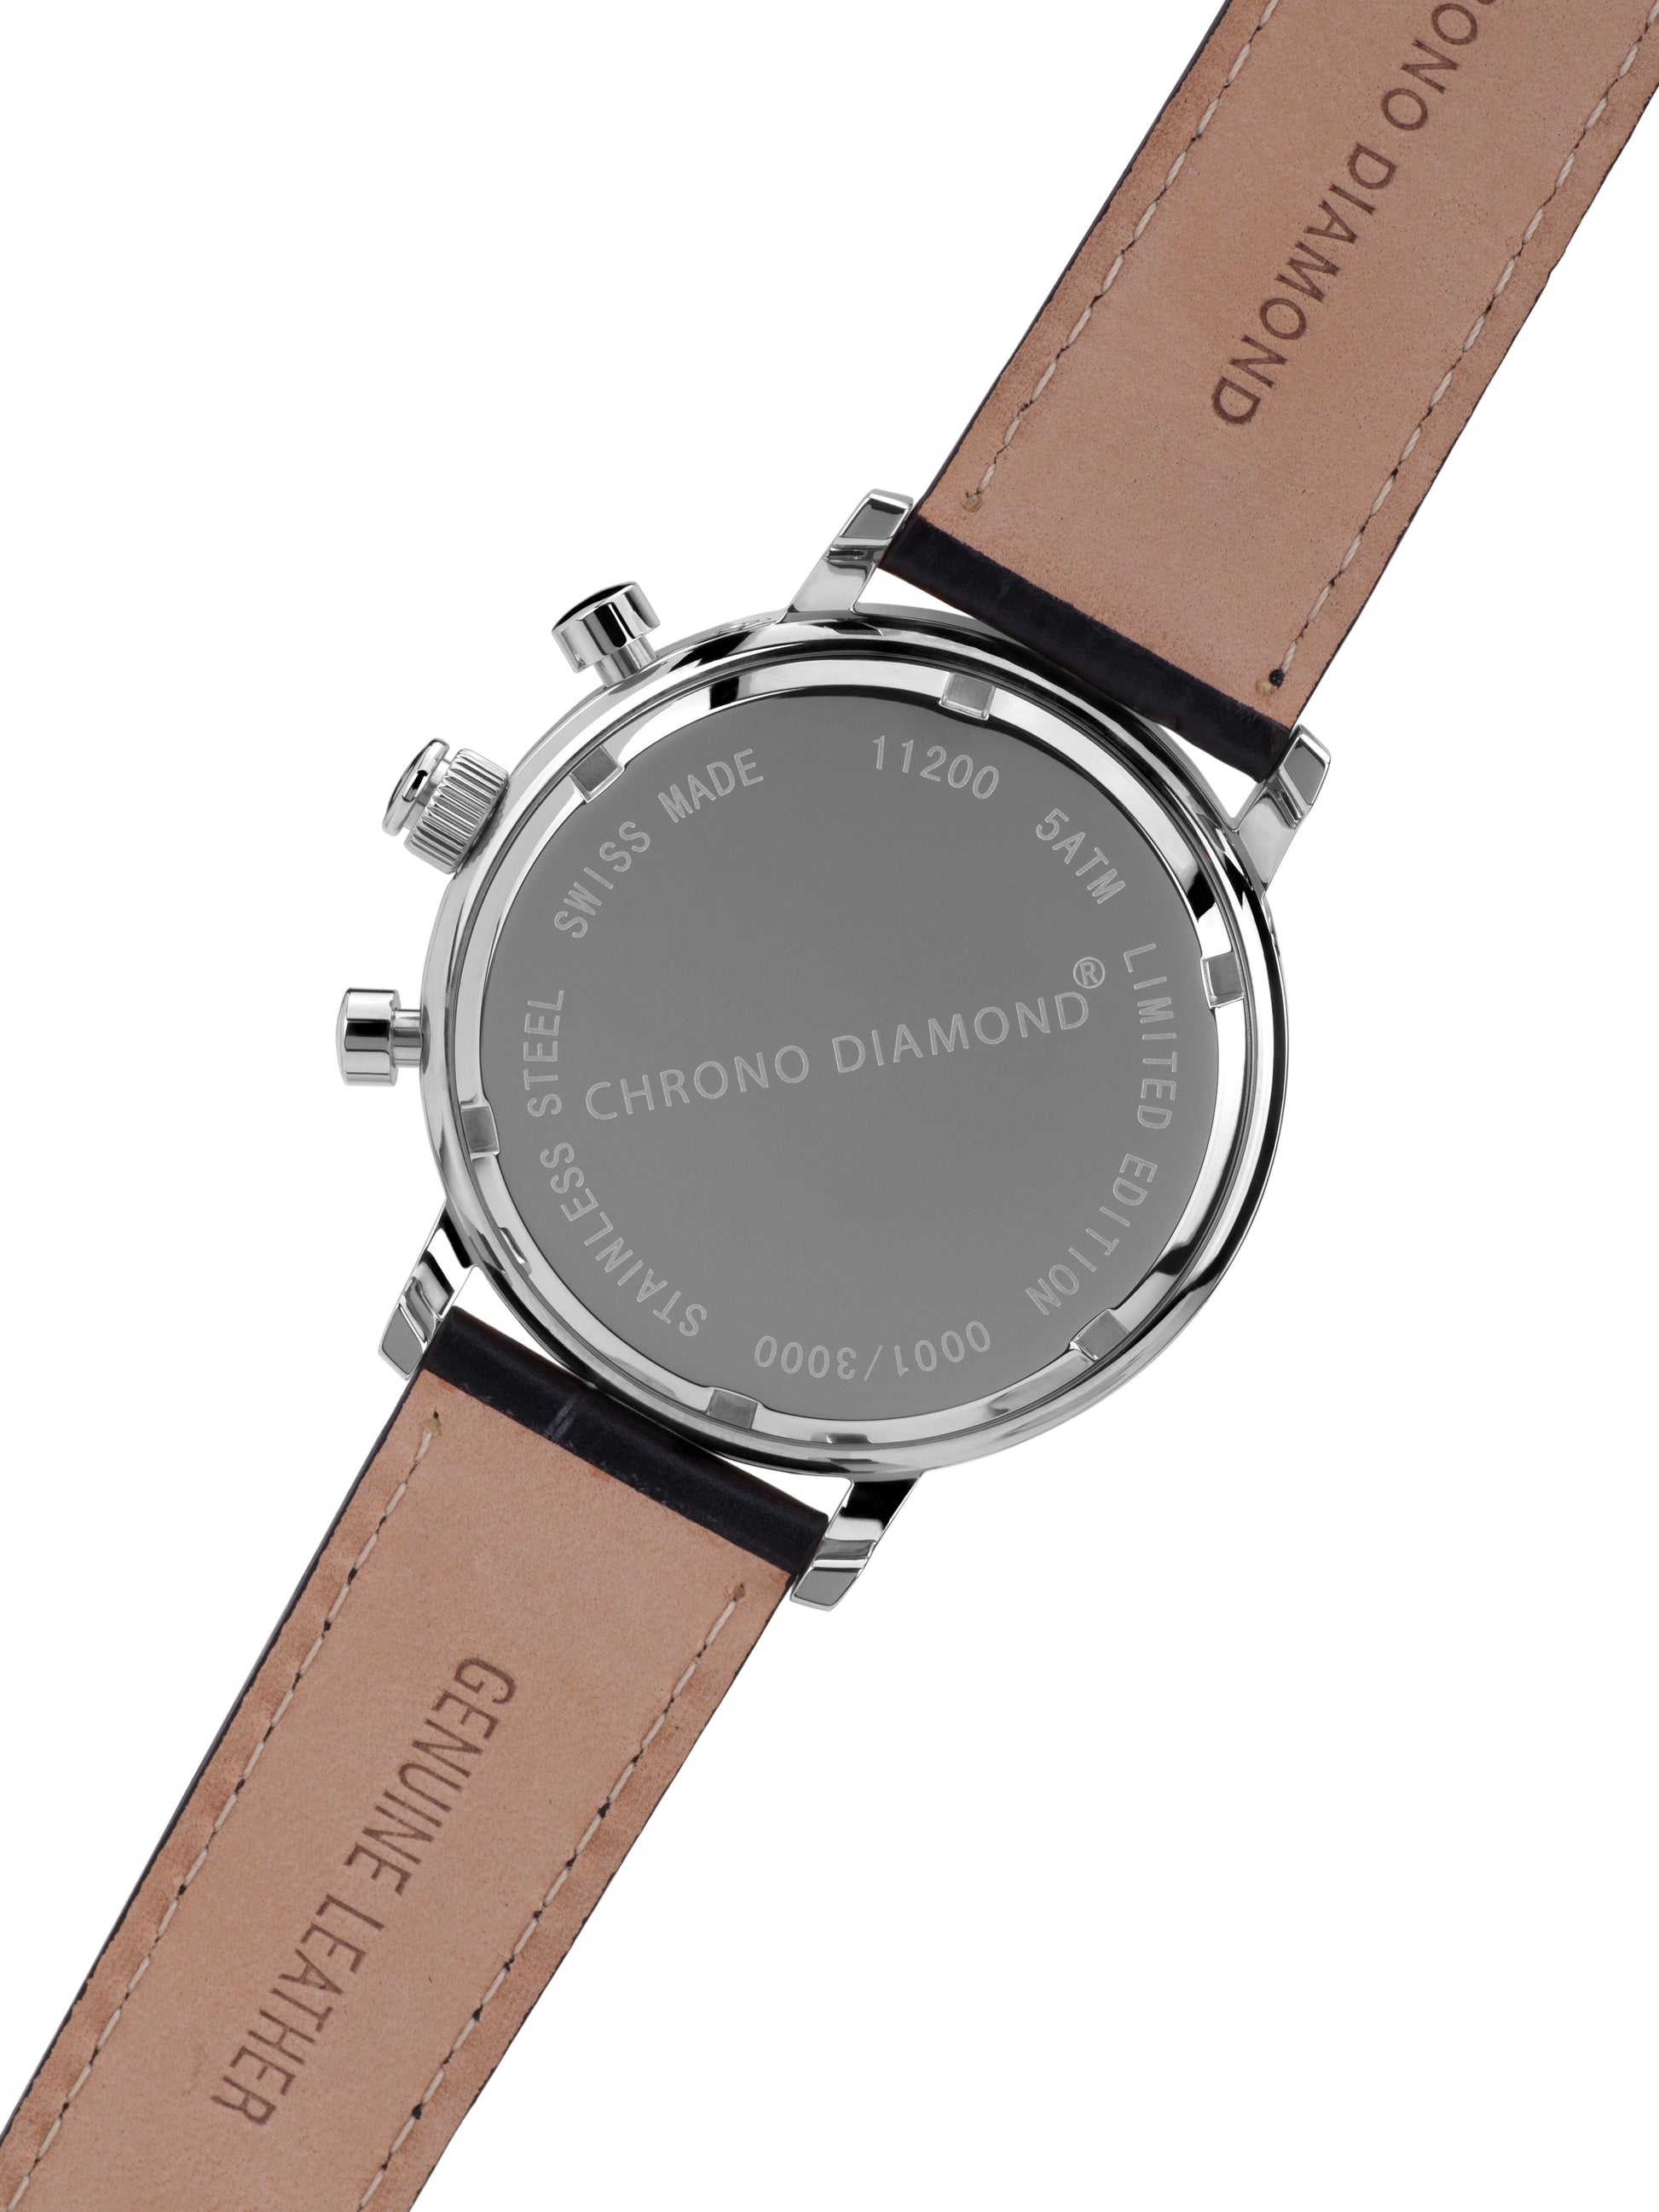 Automatic watches — Argos — Chrono Diamond — steel grey